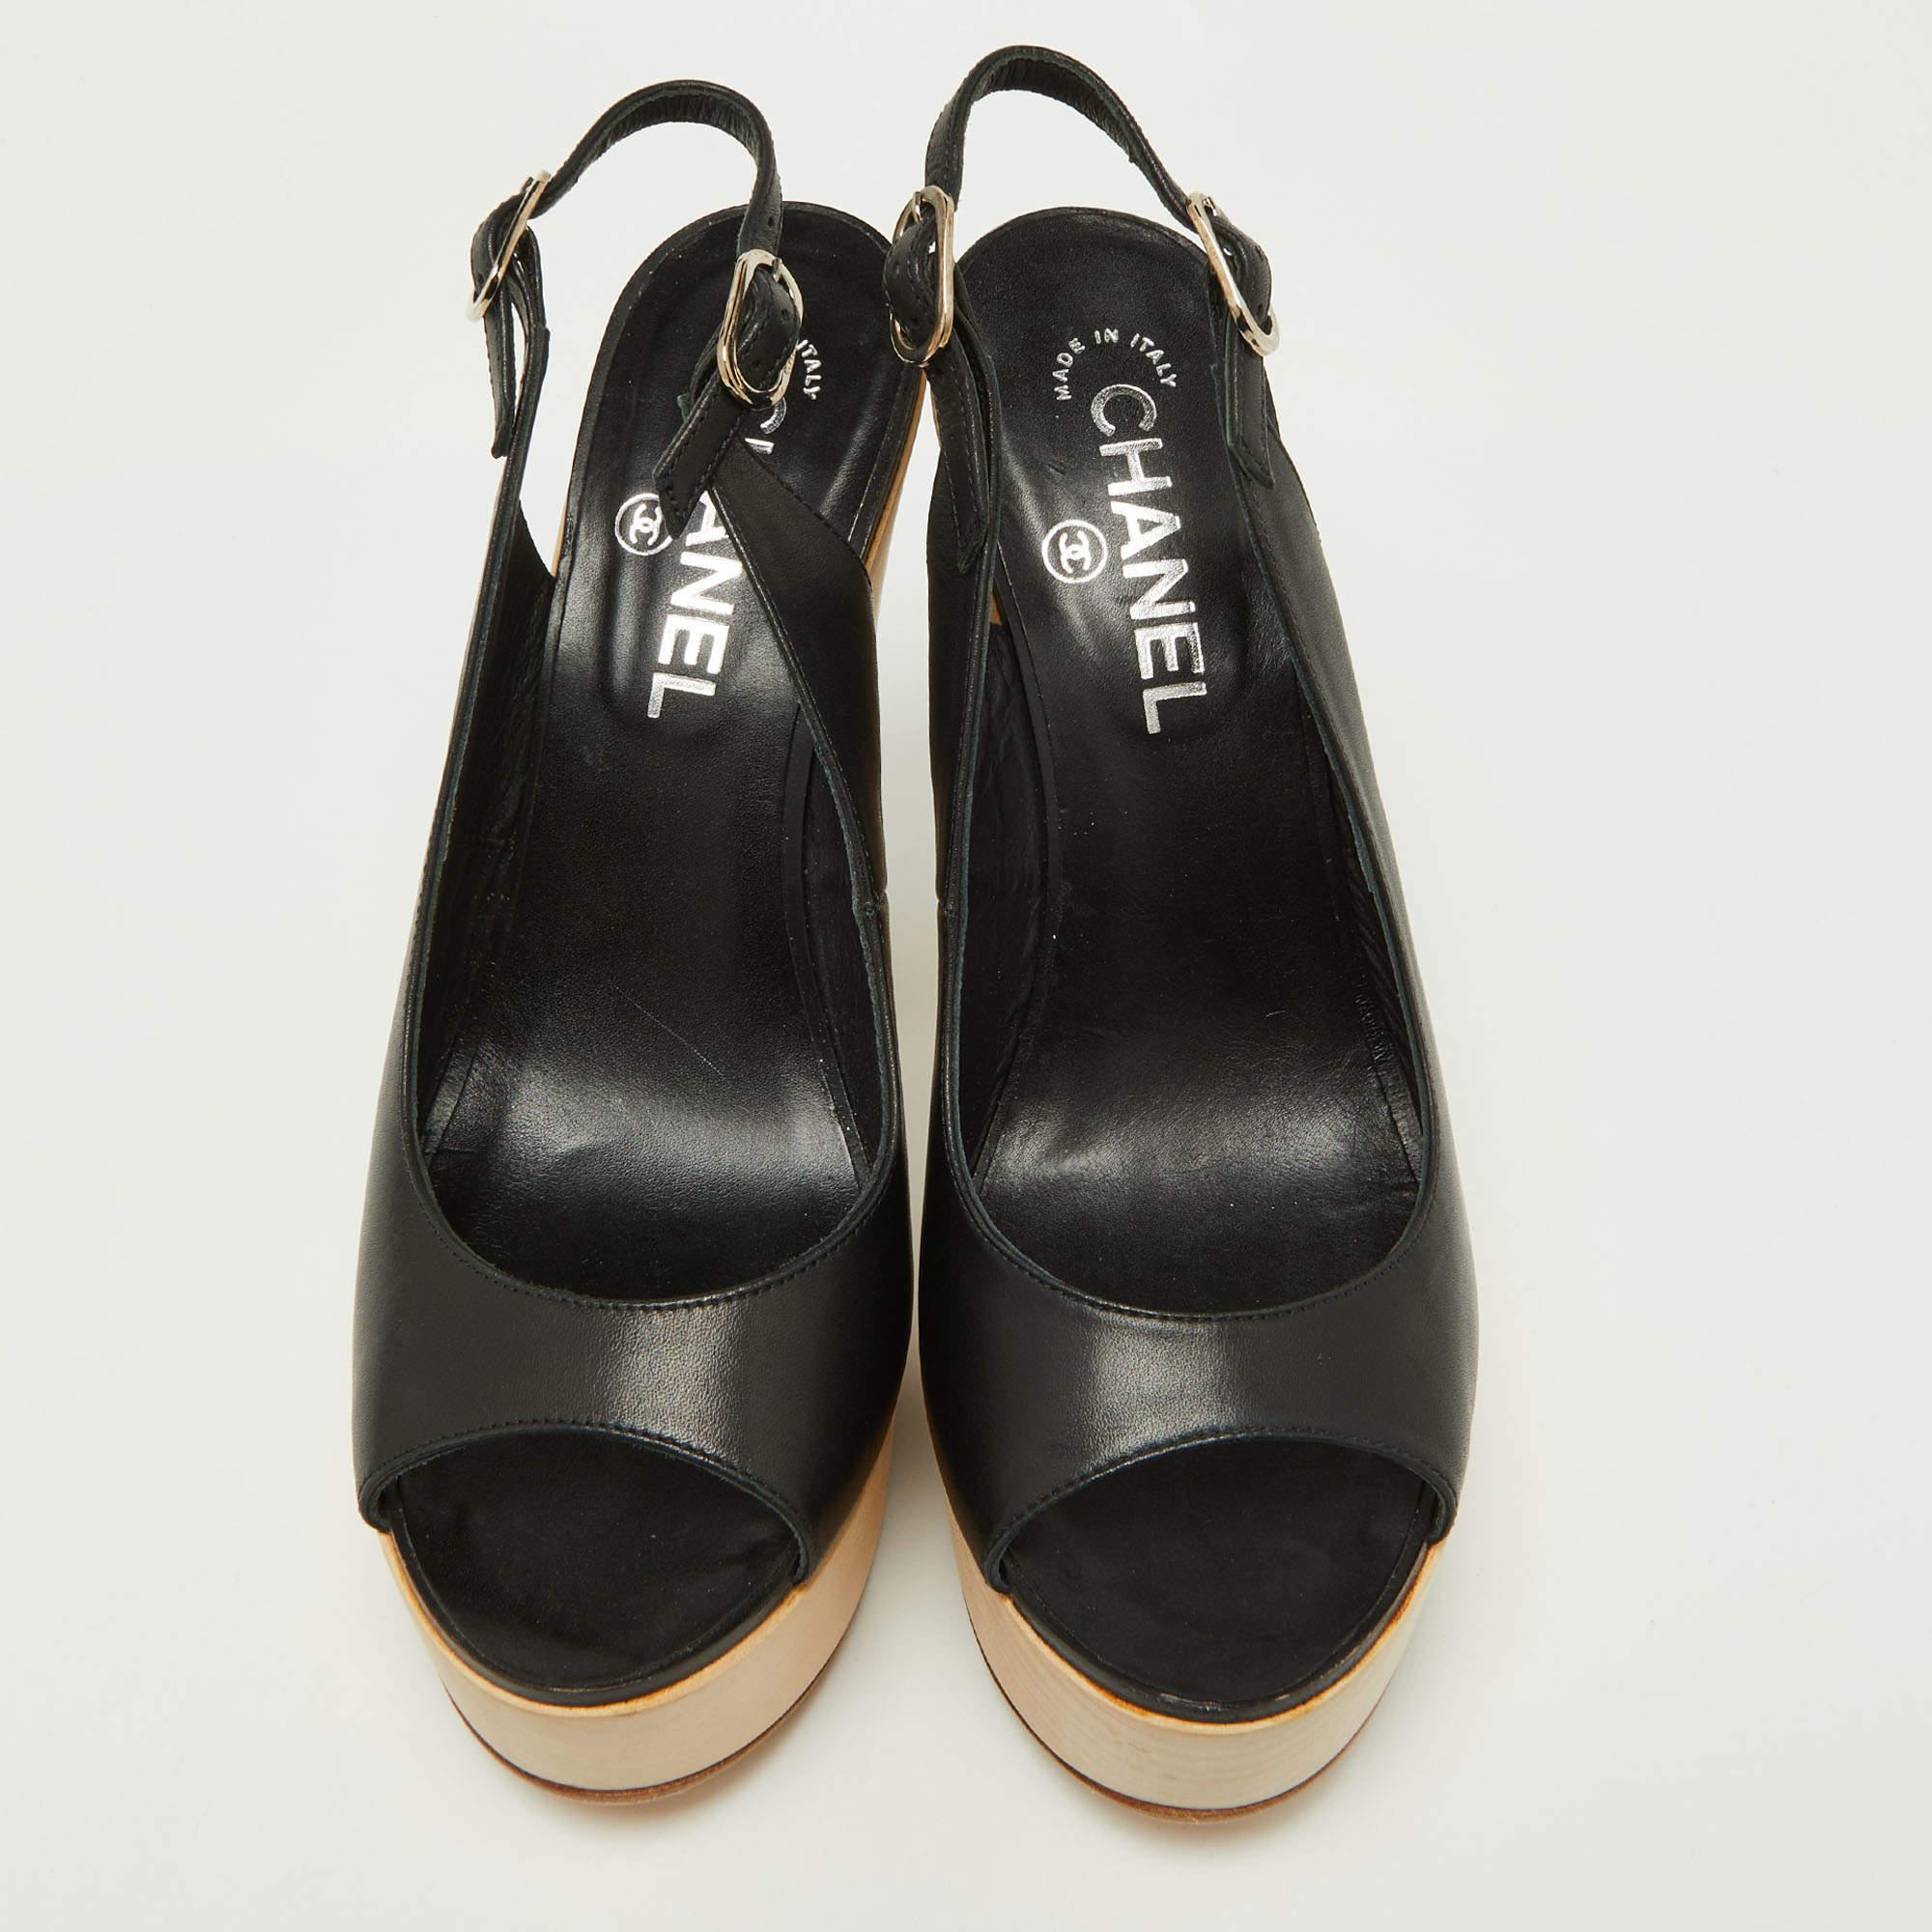 Chanel Black Leather Wooden Block Heel Slingback Platform Pumps Size 39 In Good Condition For Sale In Dubai, Al Qouz 2